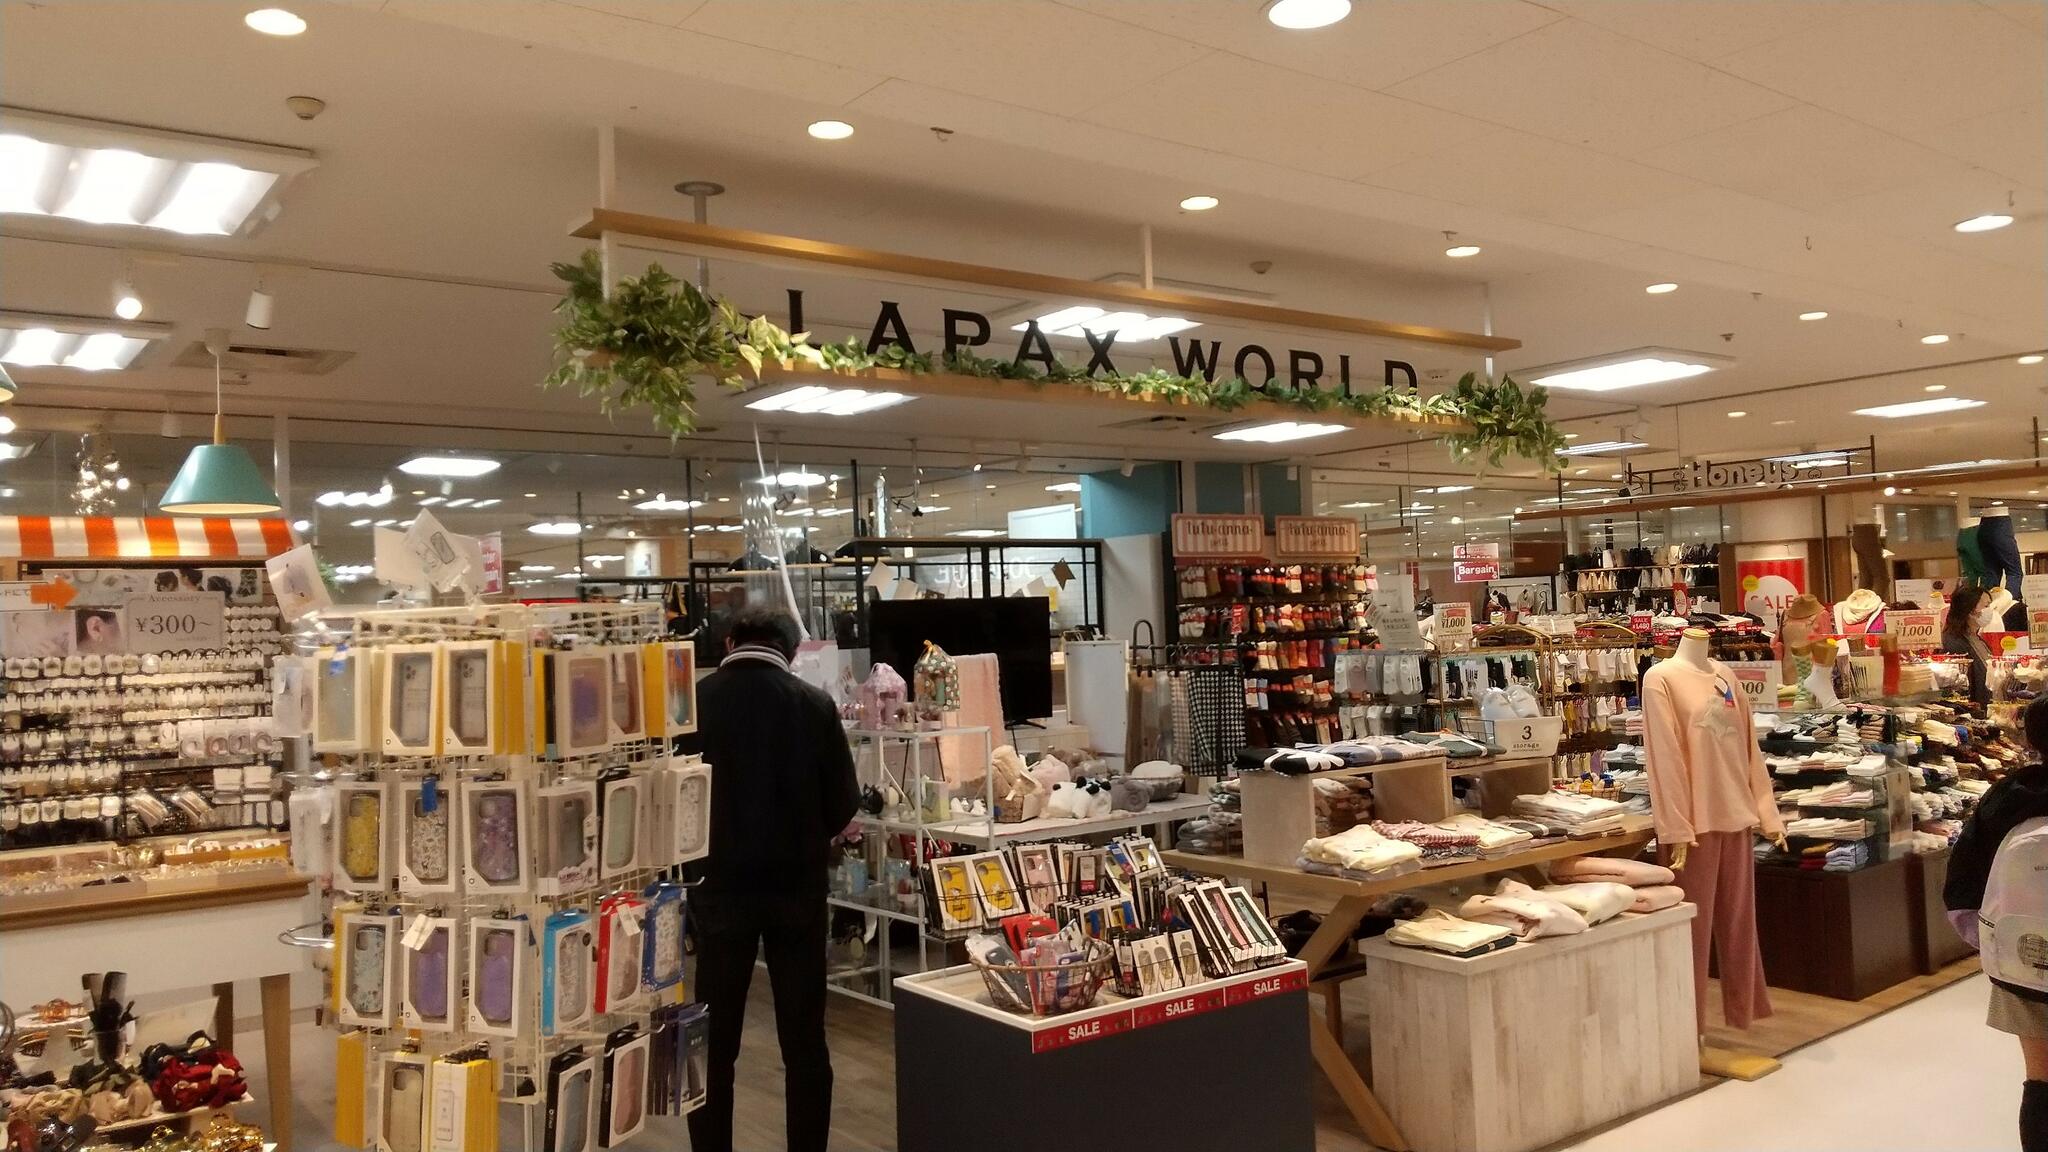 LAPAX WORLD 豊田メグリア本店の代表写真1